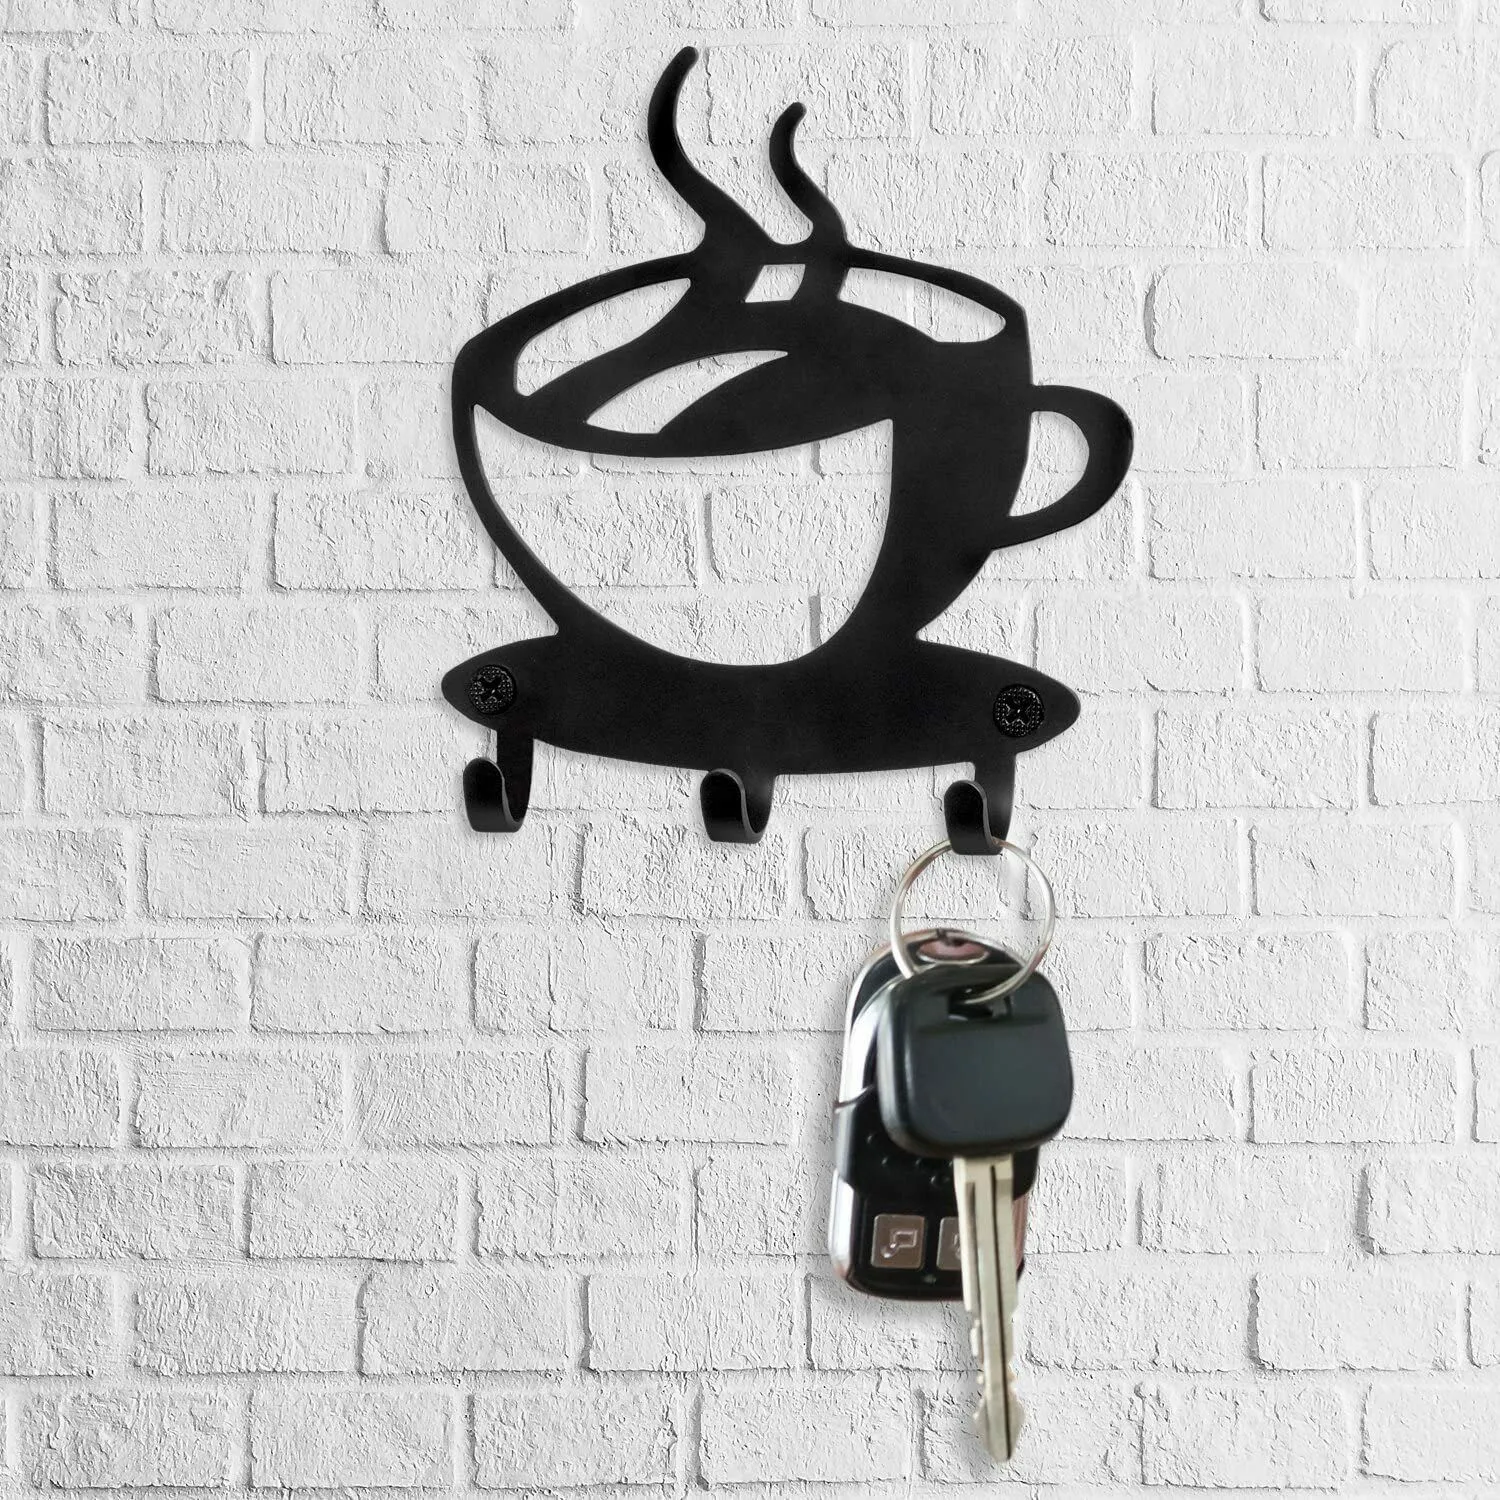 Key Holder Rack Wall Mounted-Modern Coffee Time Decor Key Organizer with 3 Hooks